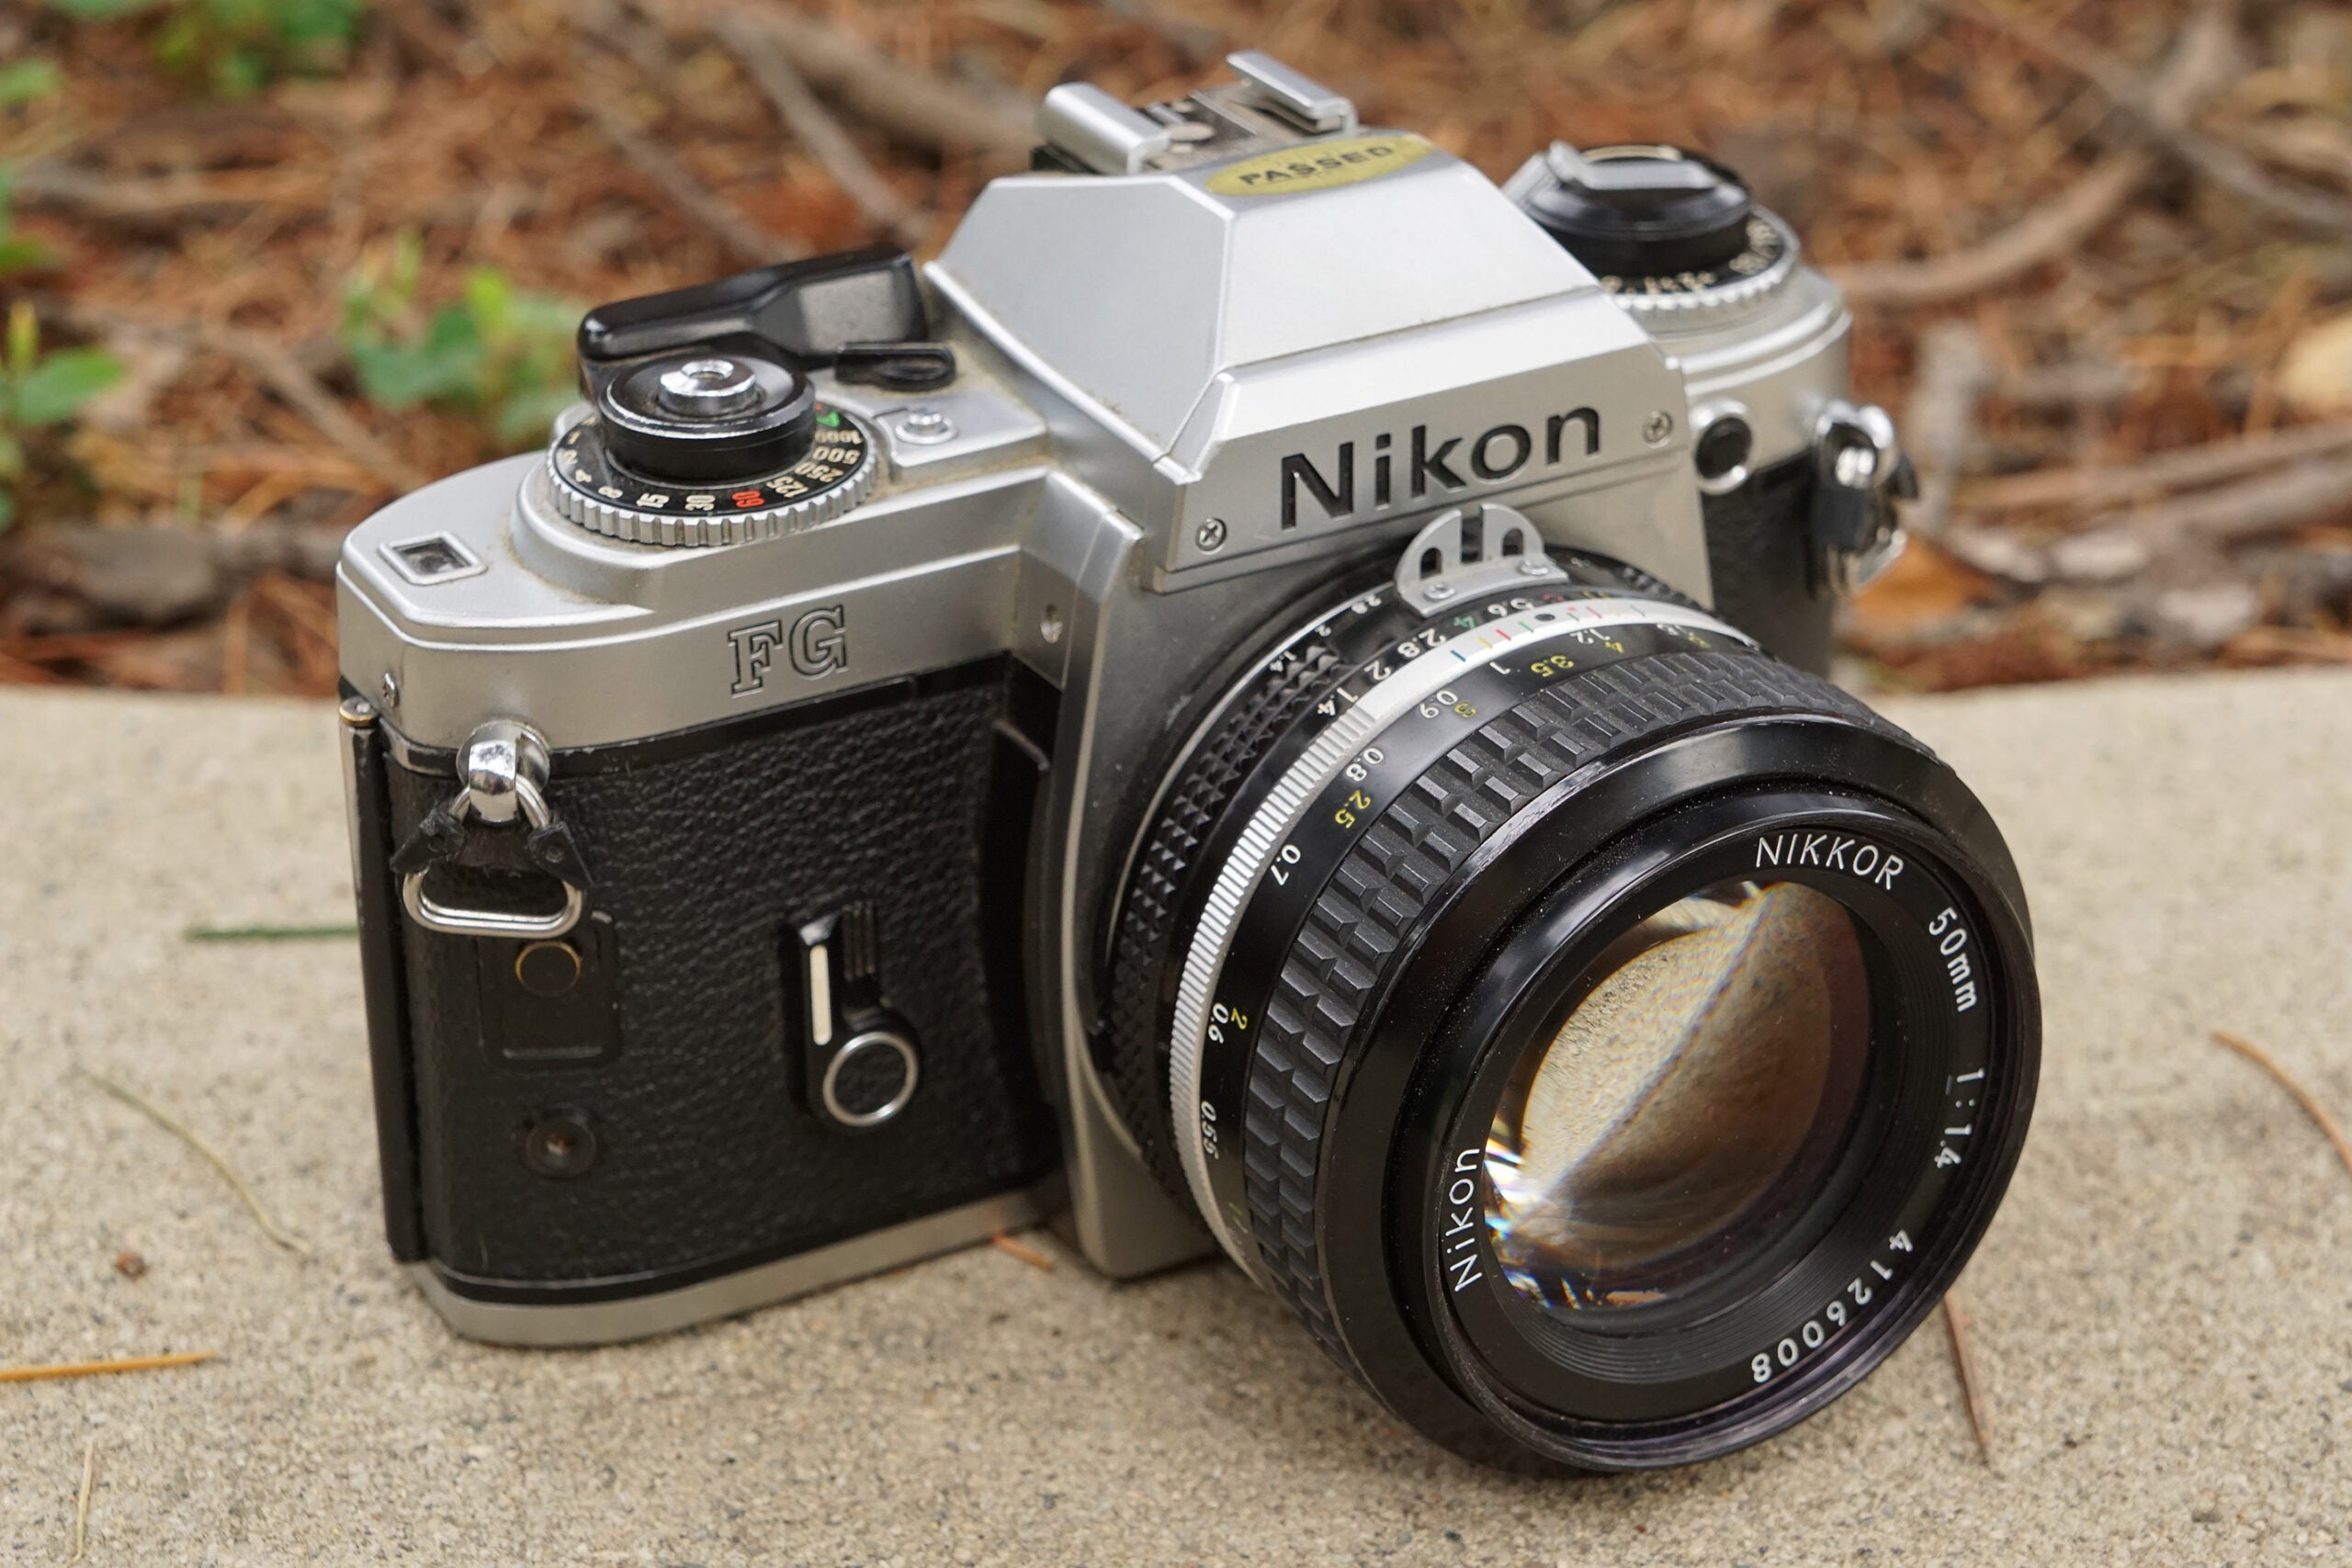 Nikon FG 35mm film camera sitting on a ledge.